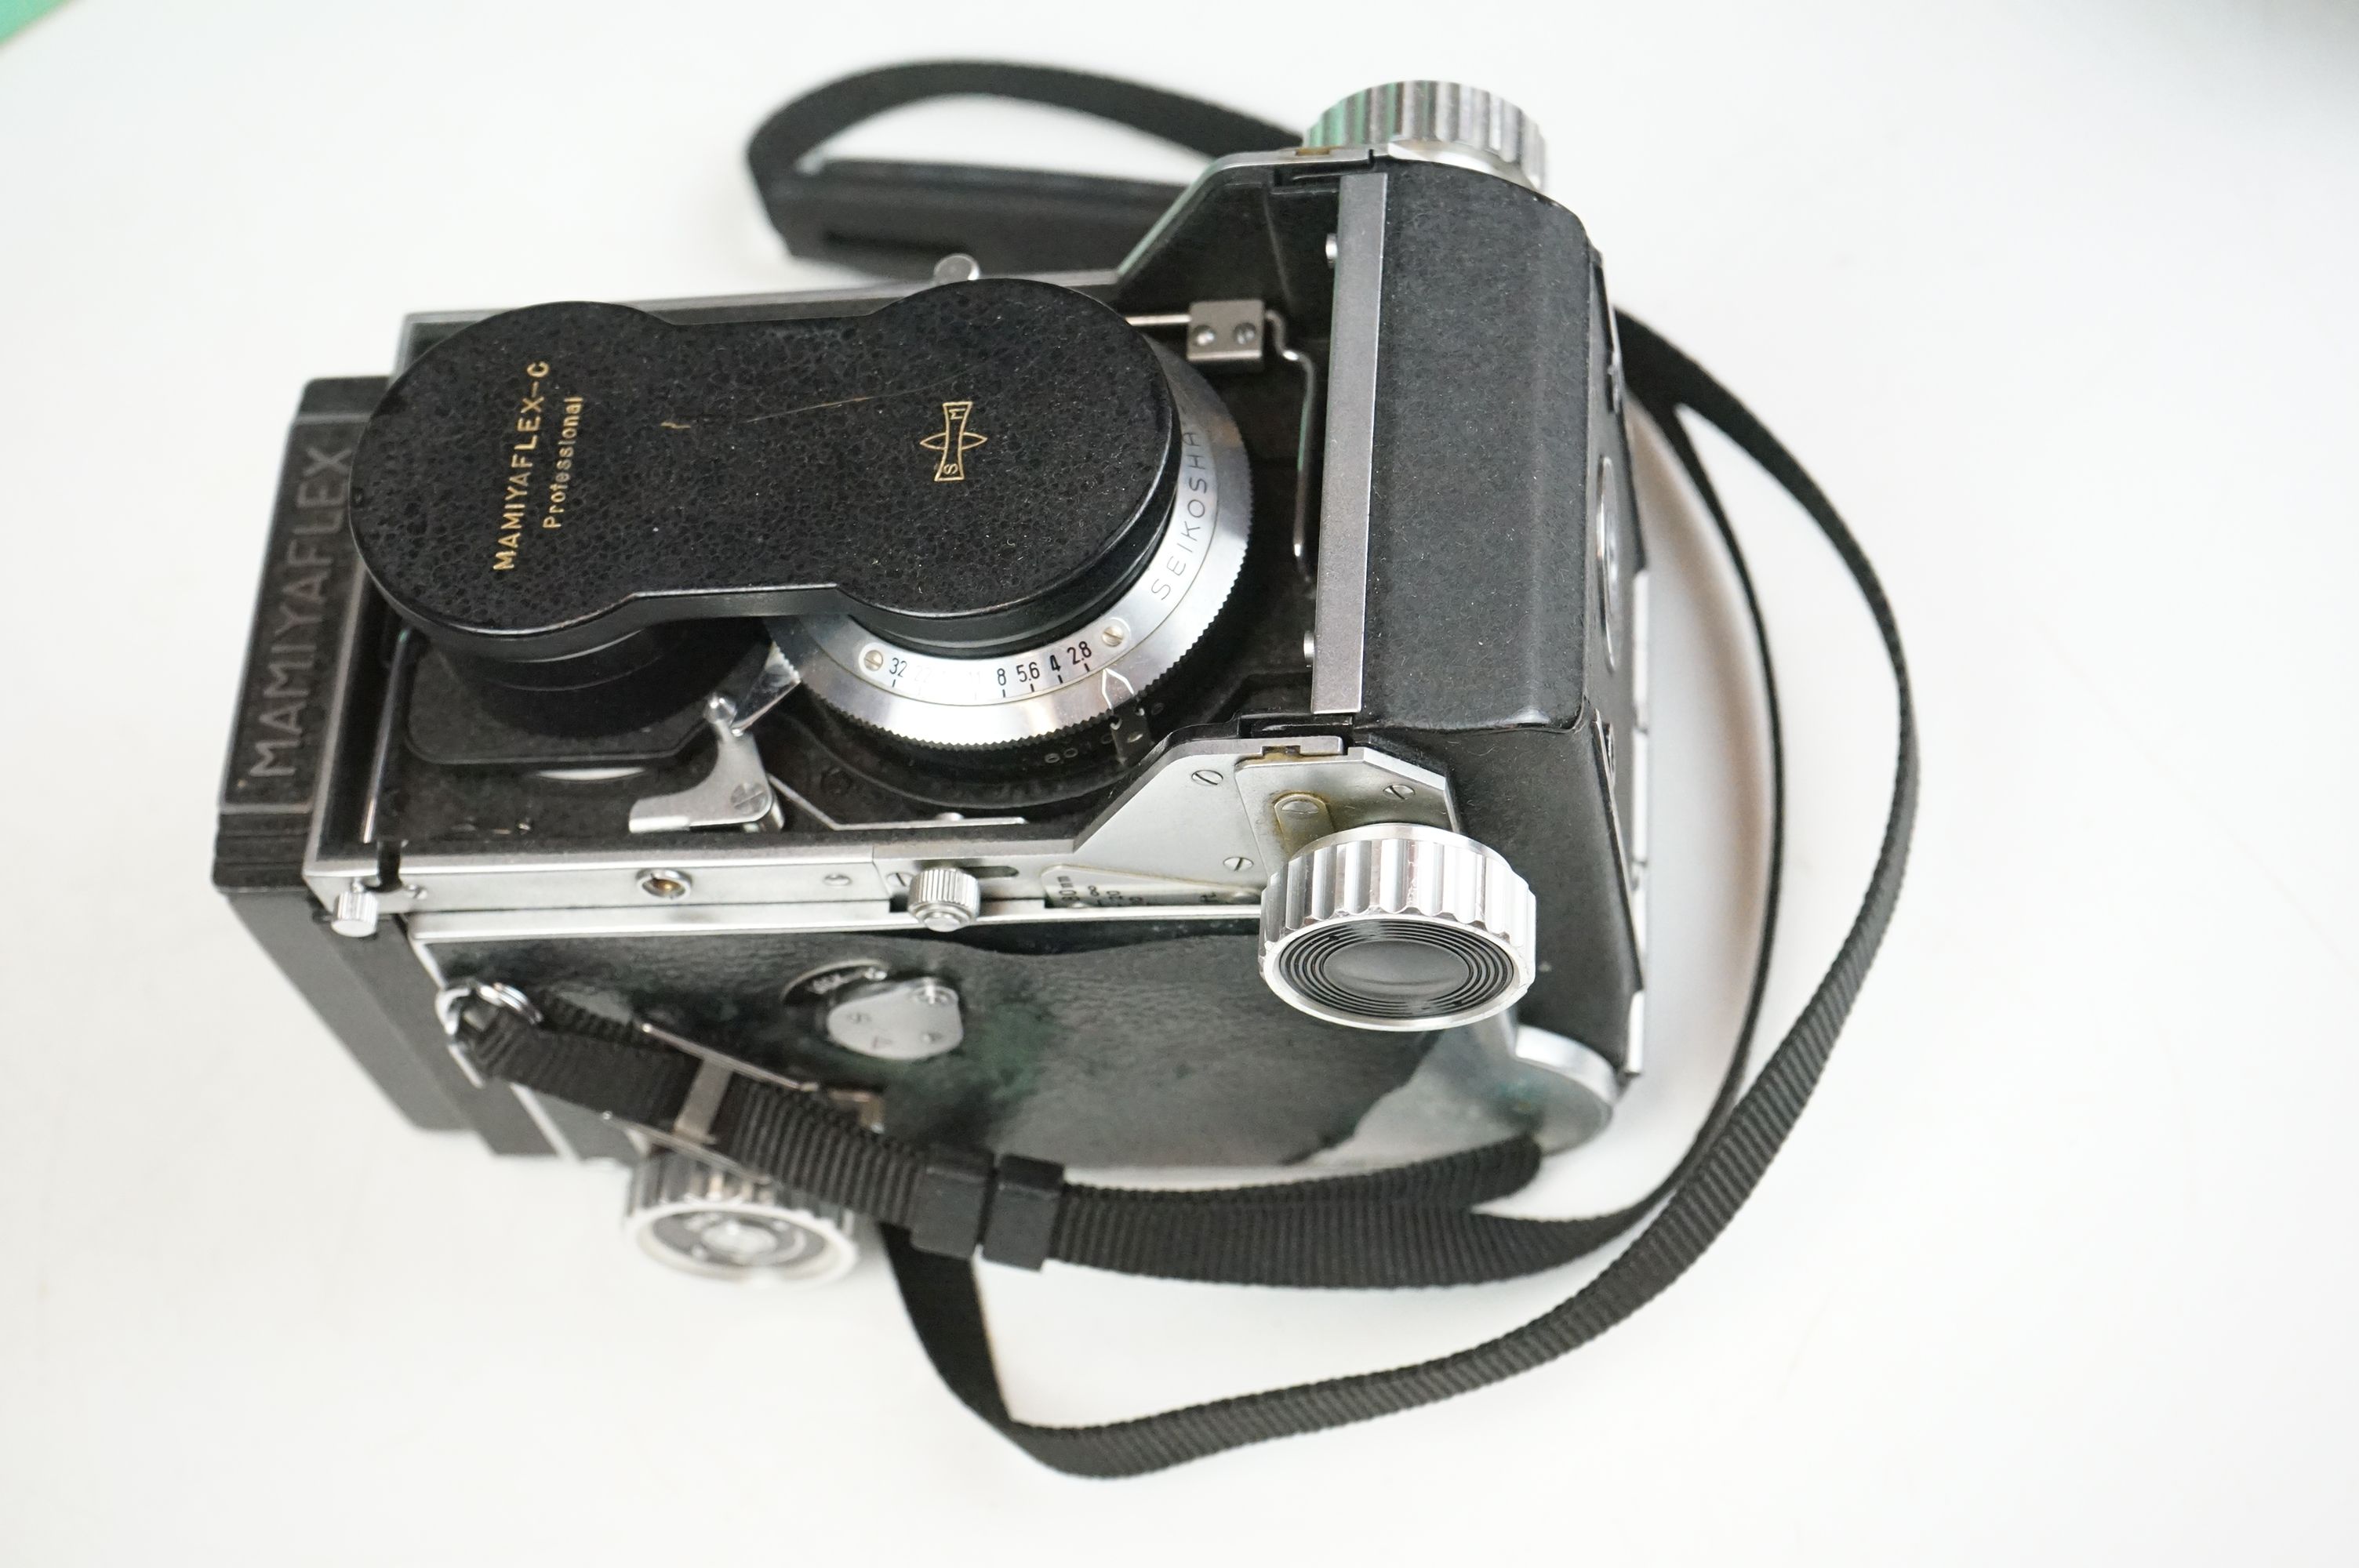 Mamiya Flex C Professional Medium Format Camera with accessories - Image 7 of 14